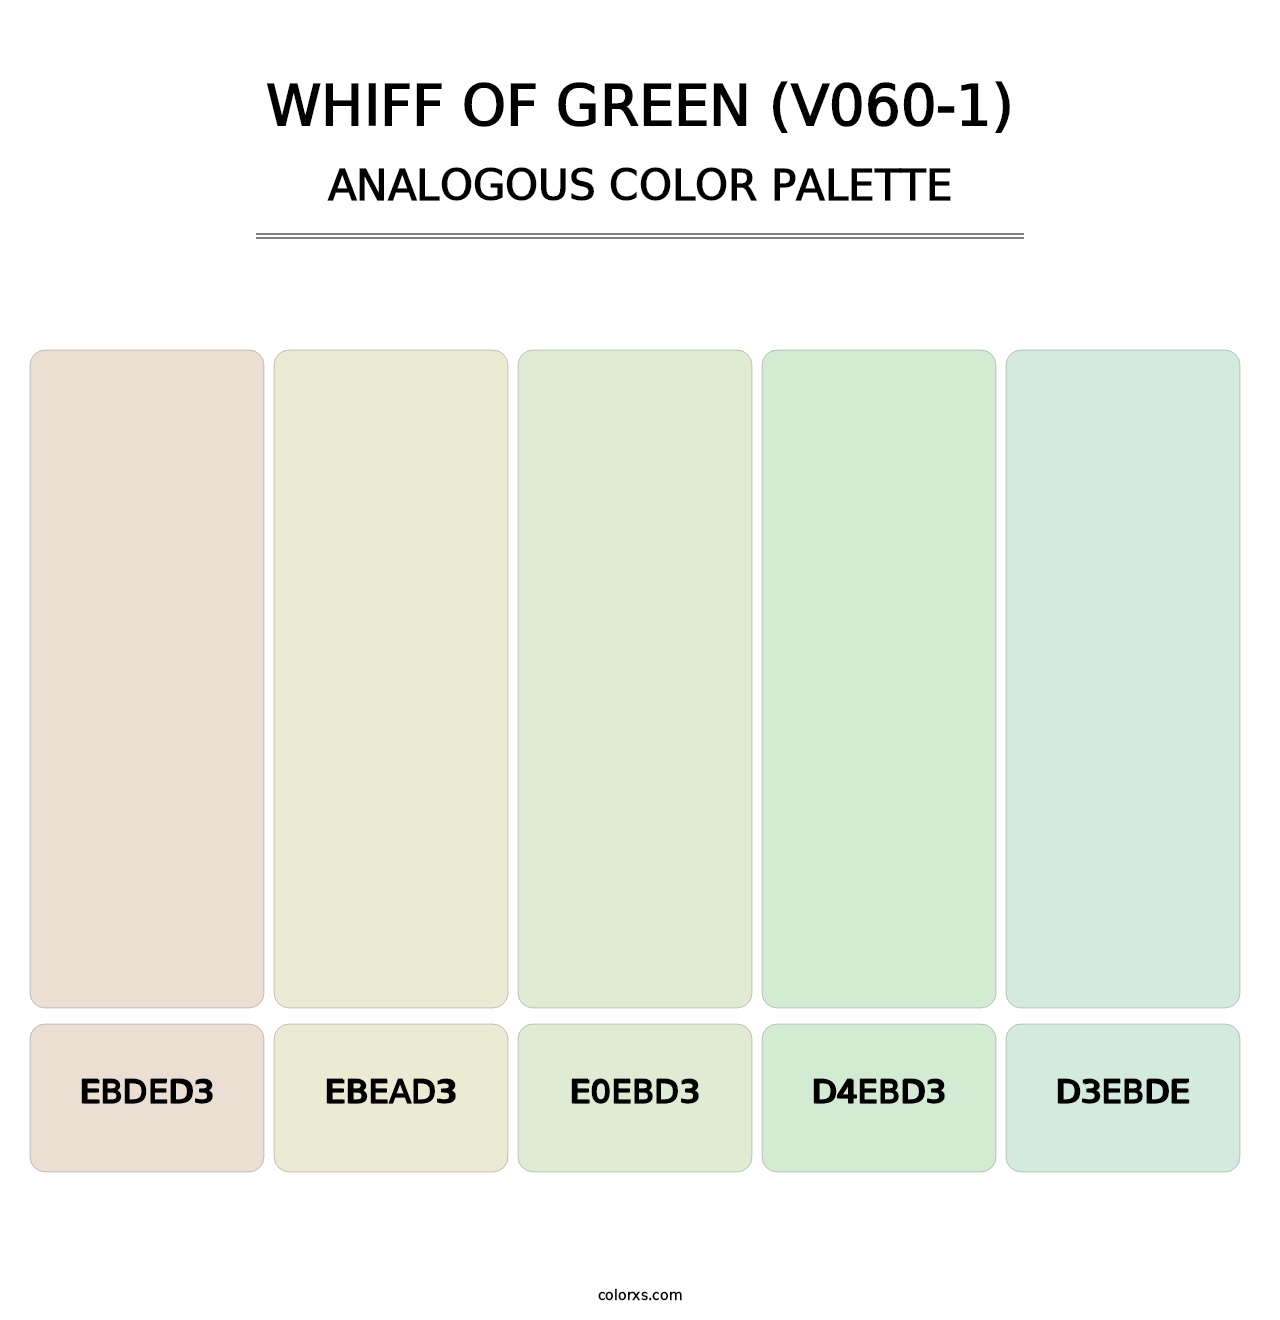 Whiff of Green (V060-1) - Analogous Color Palette